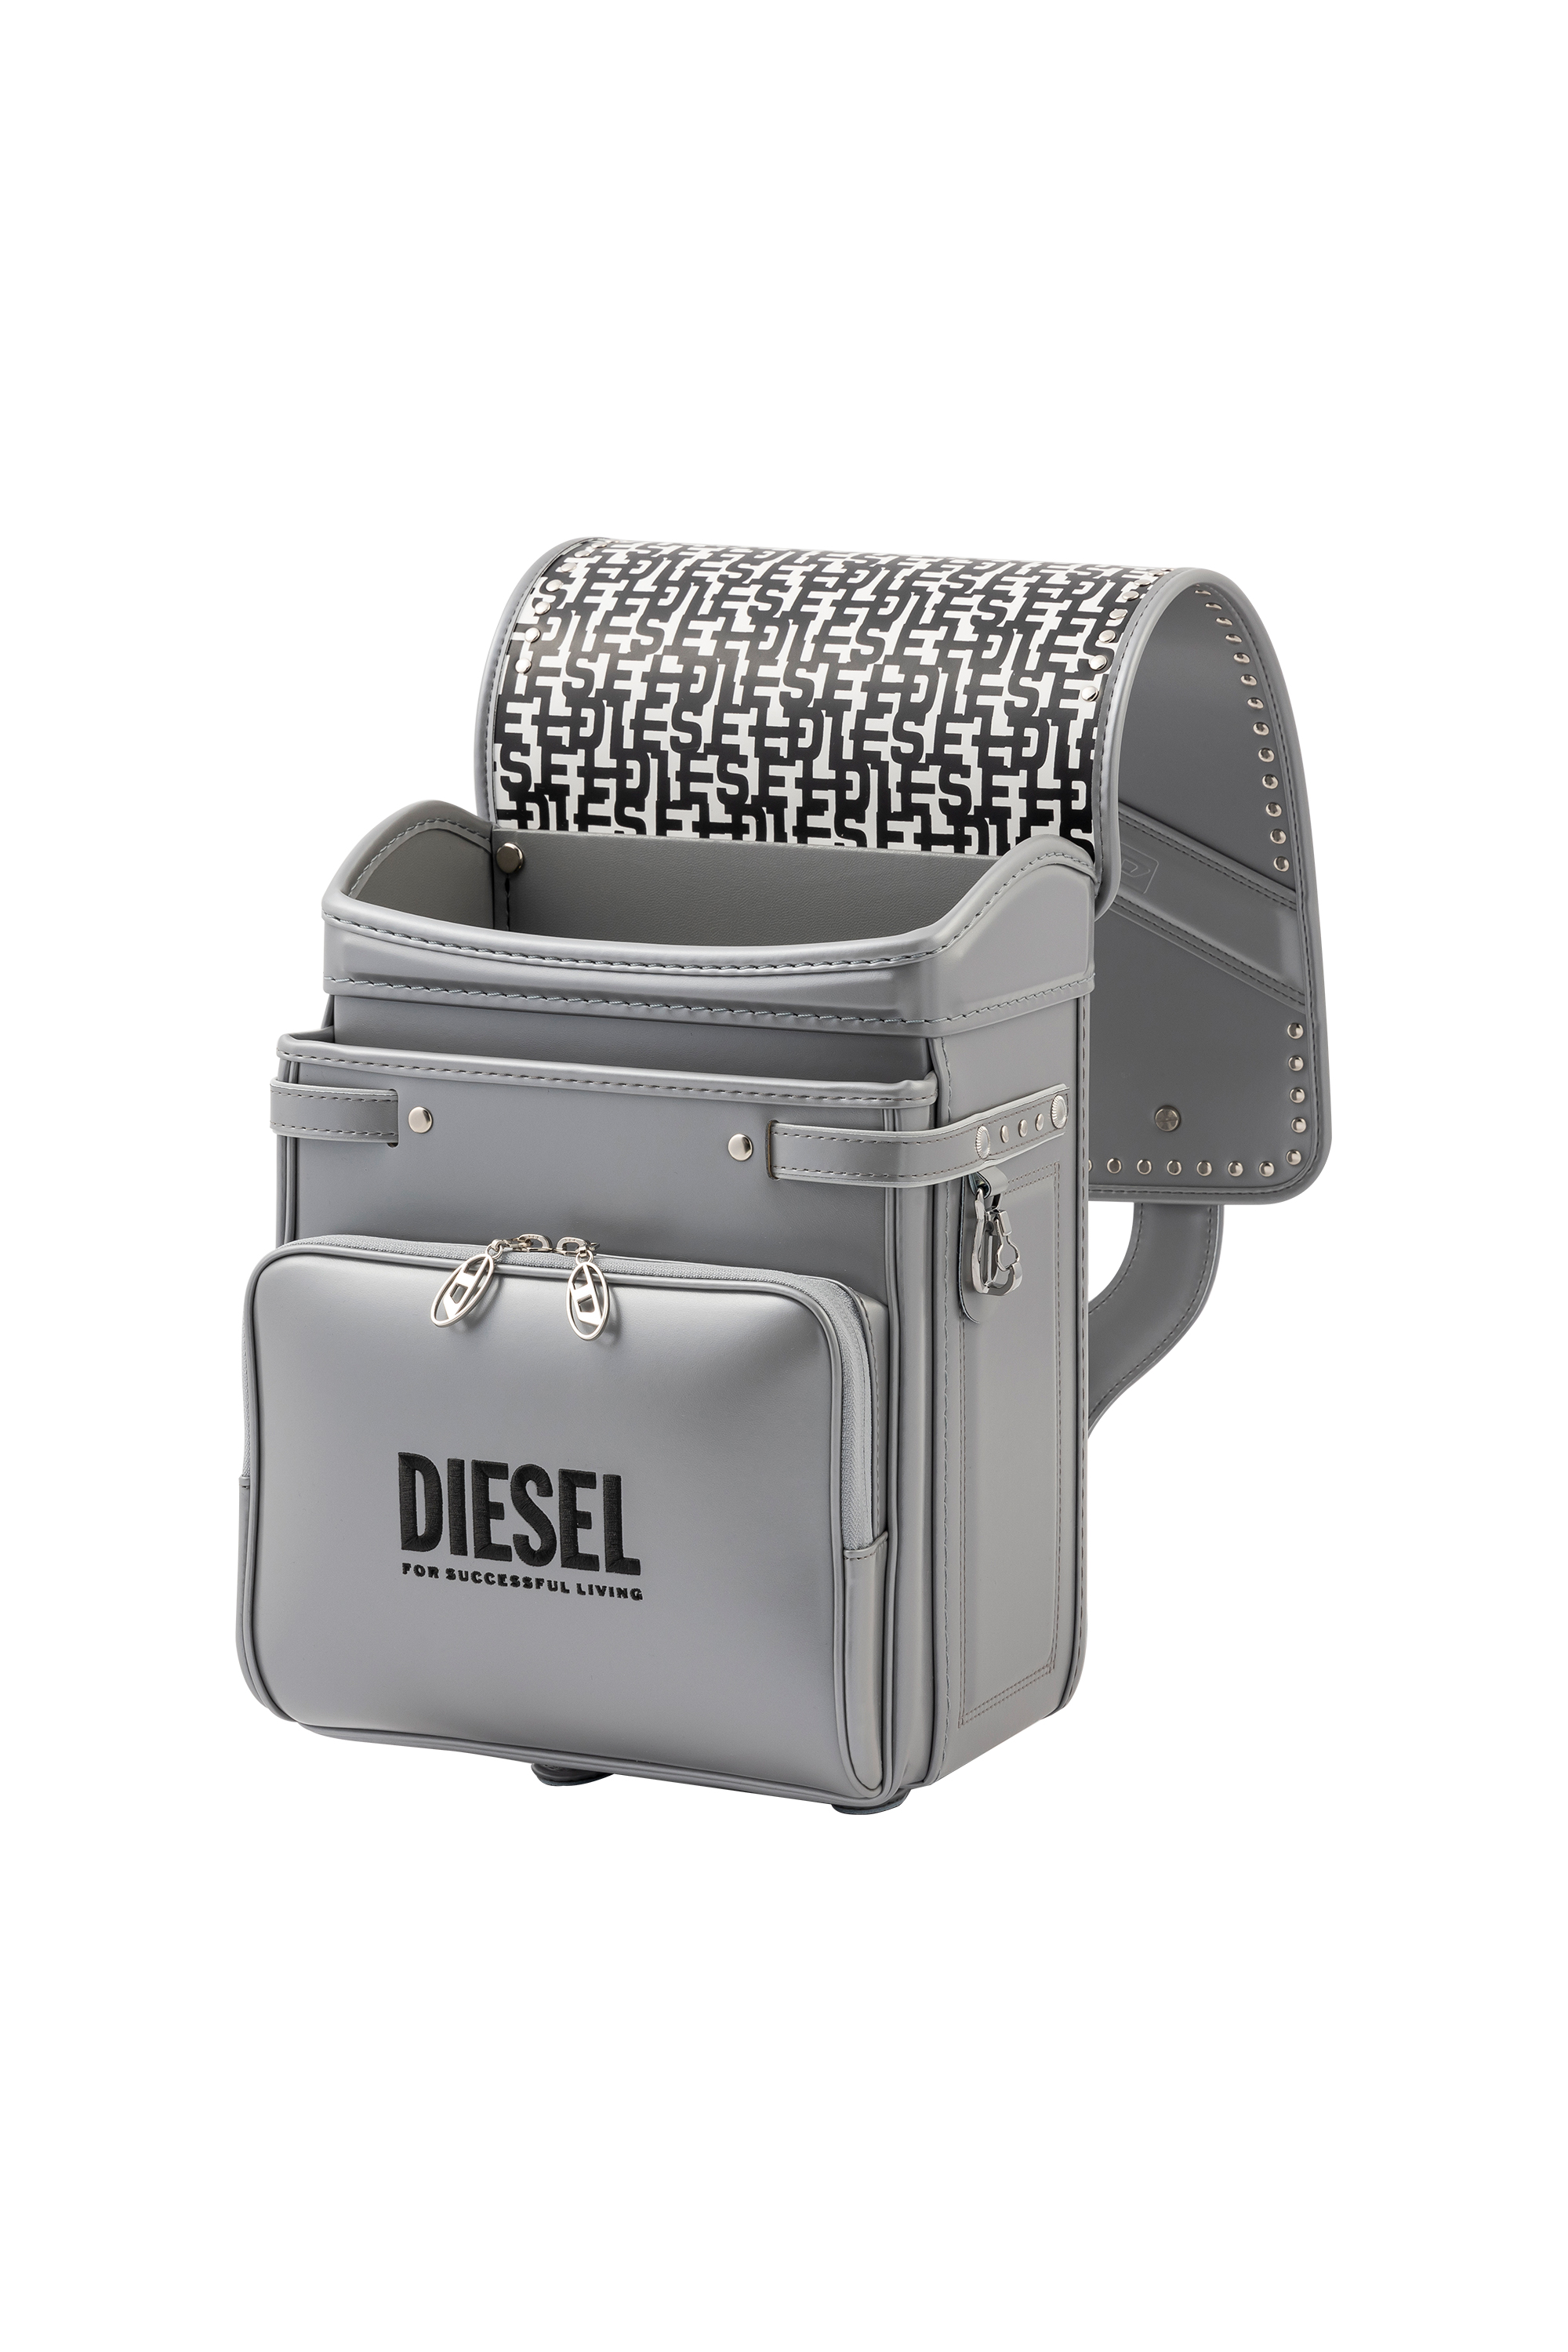 Diesel - DISR-20003 Rock, シルバー - Image 2